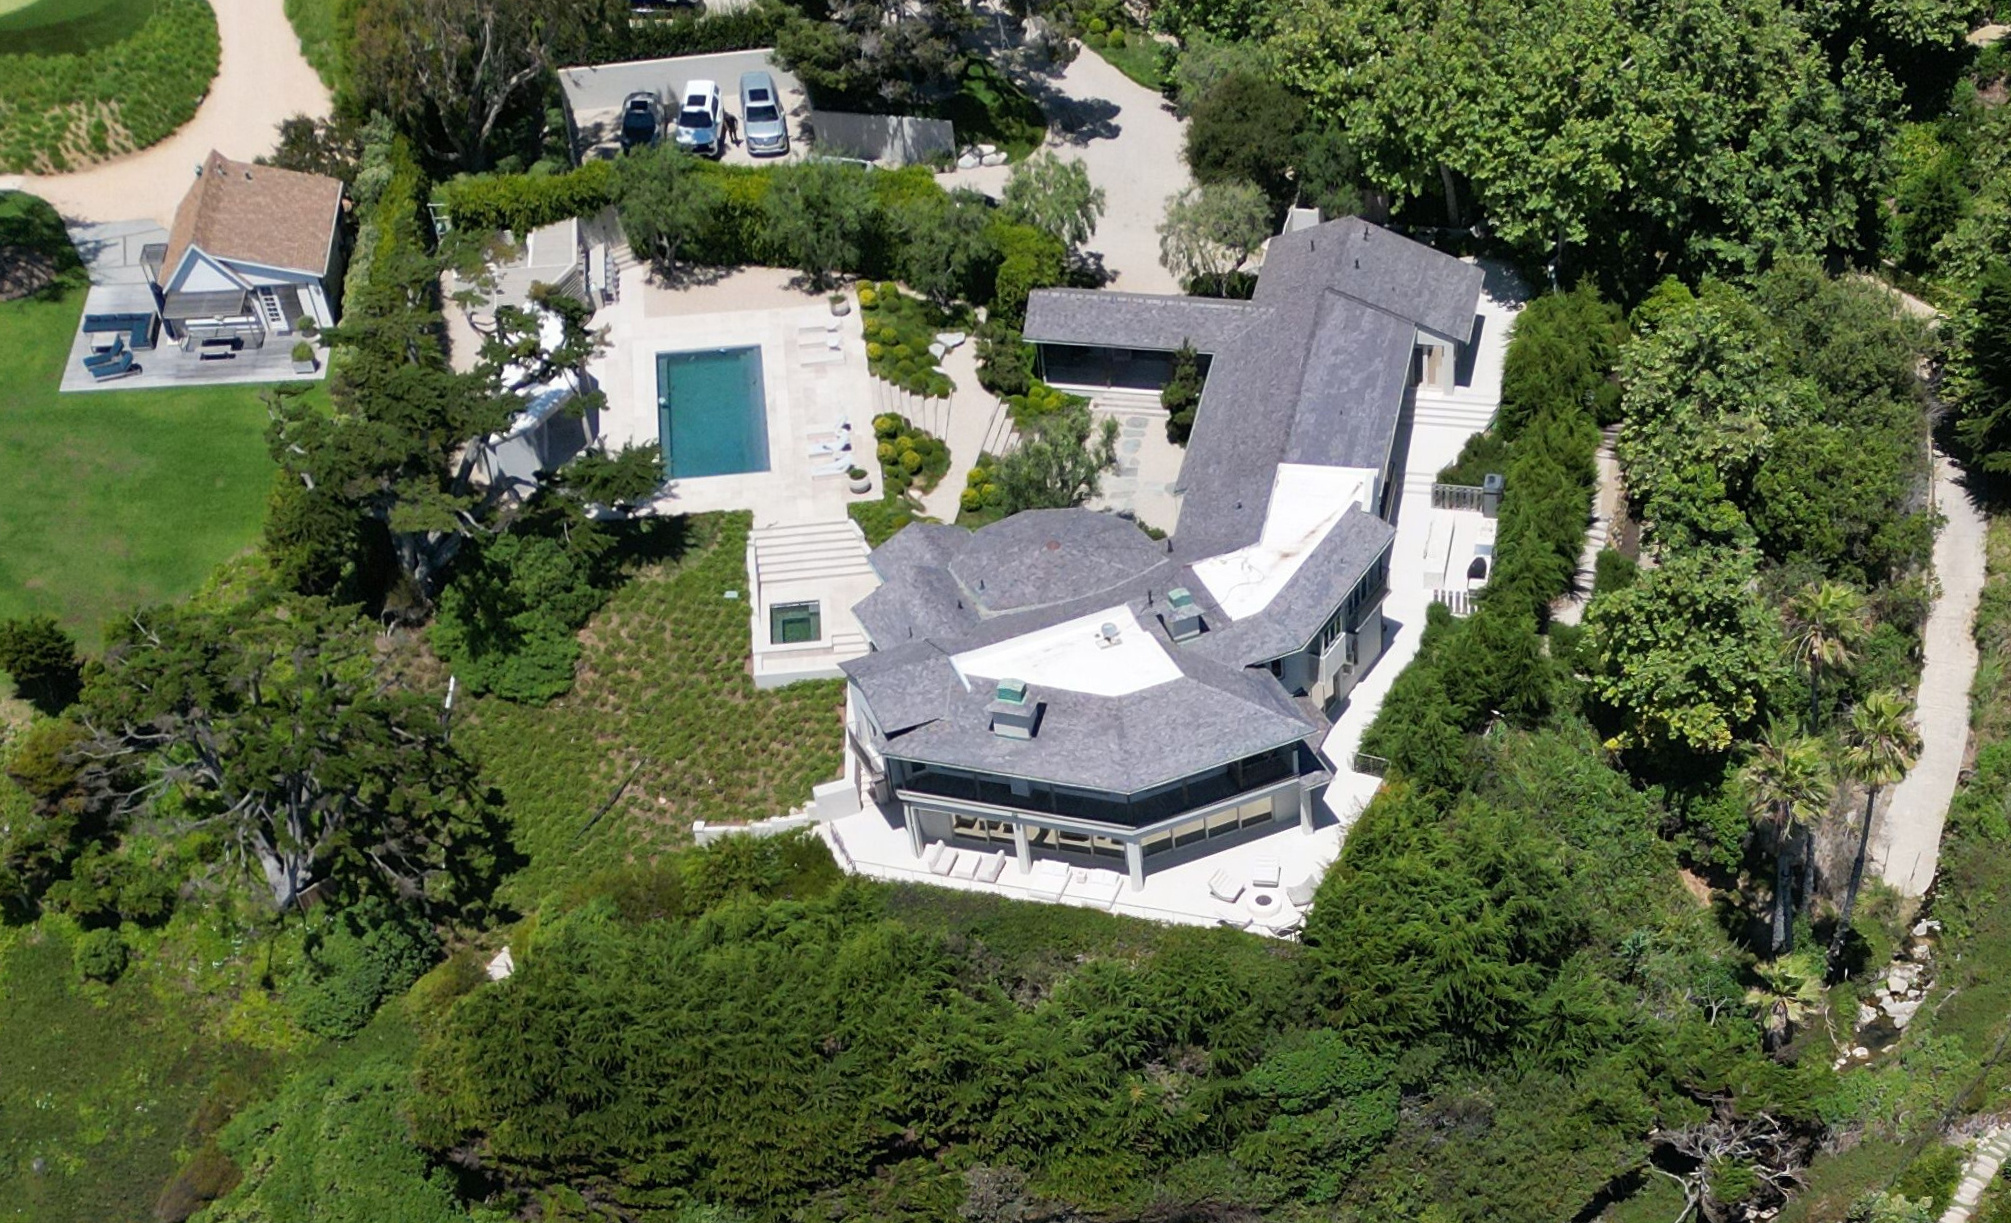 The view from above Kim Kardashian's massive Malibu beach mansion